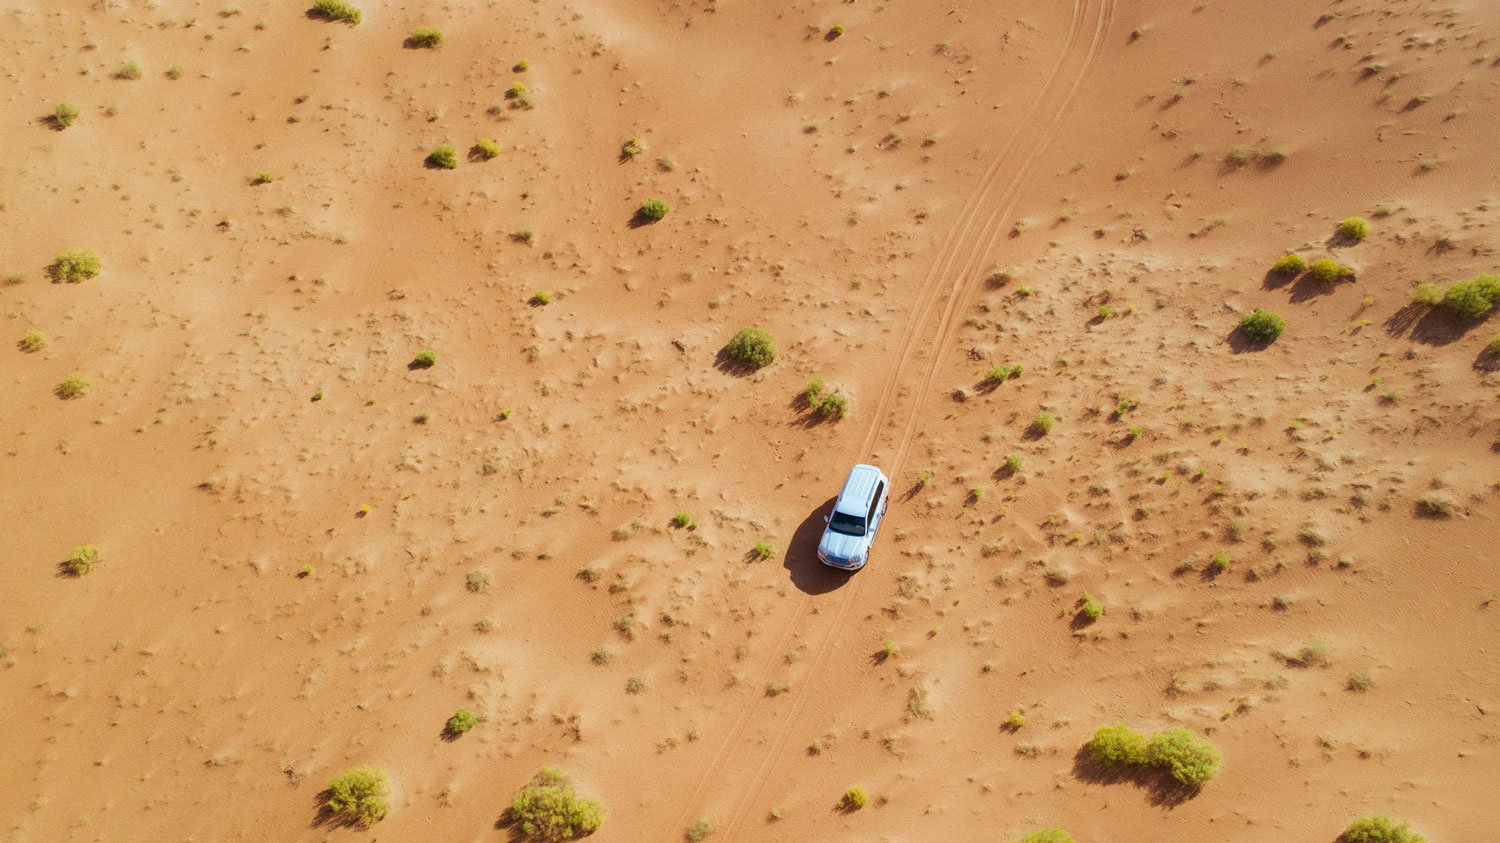 An exhilarating ride across Abu Dhabi's sand dunes